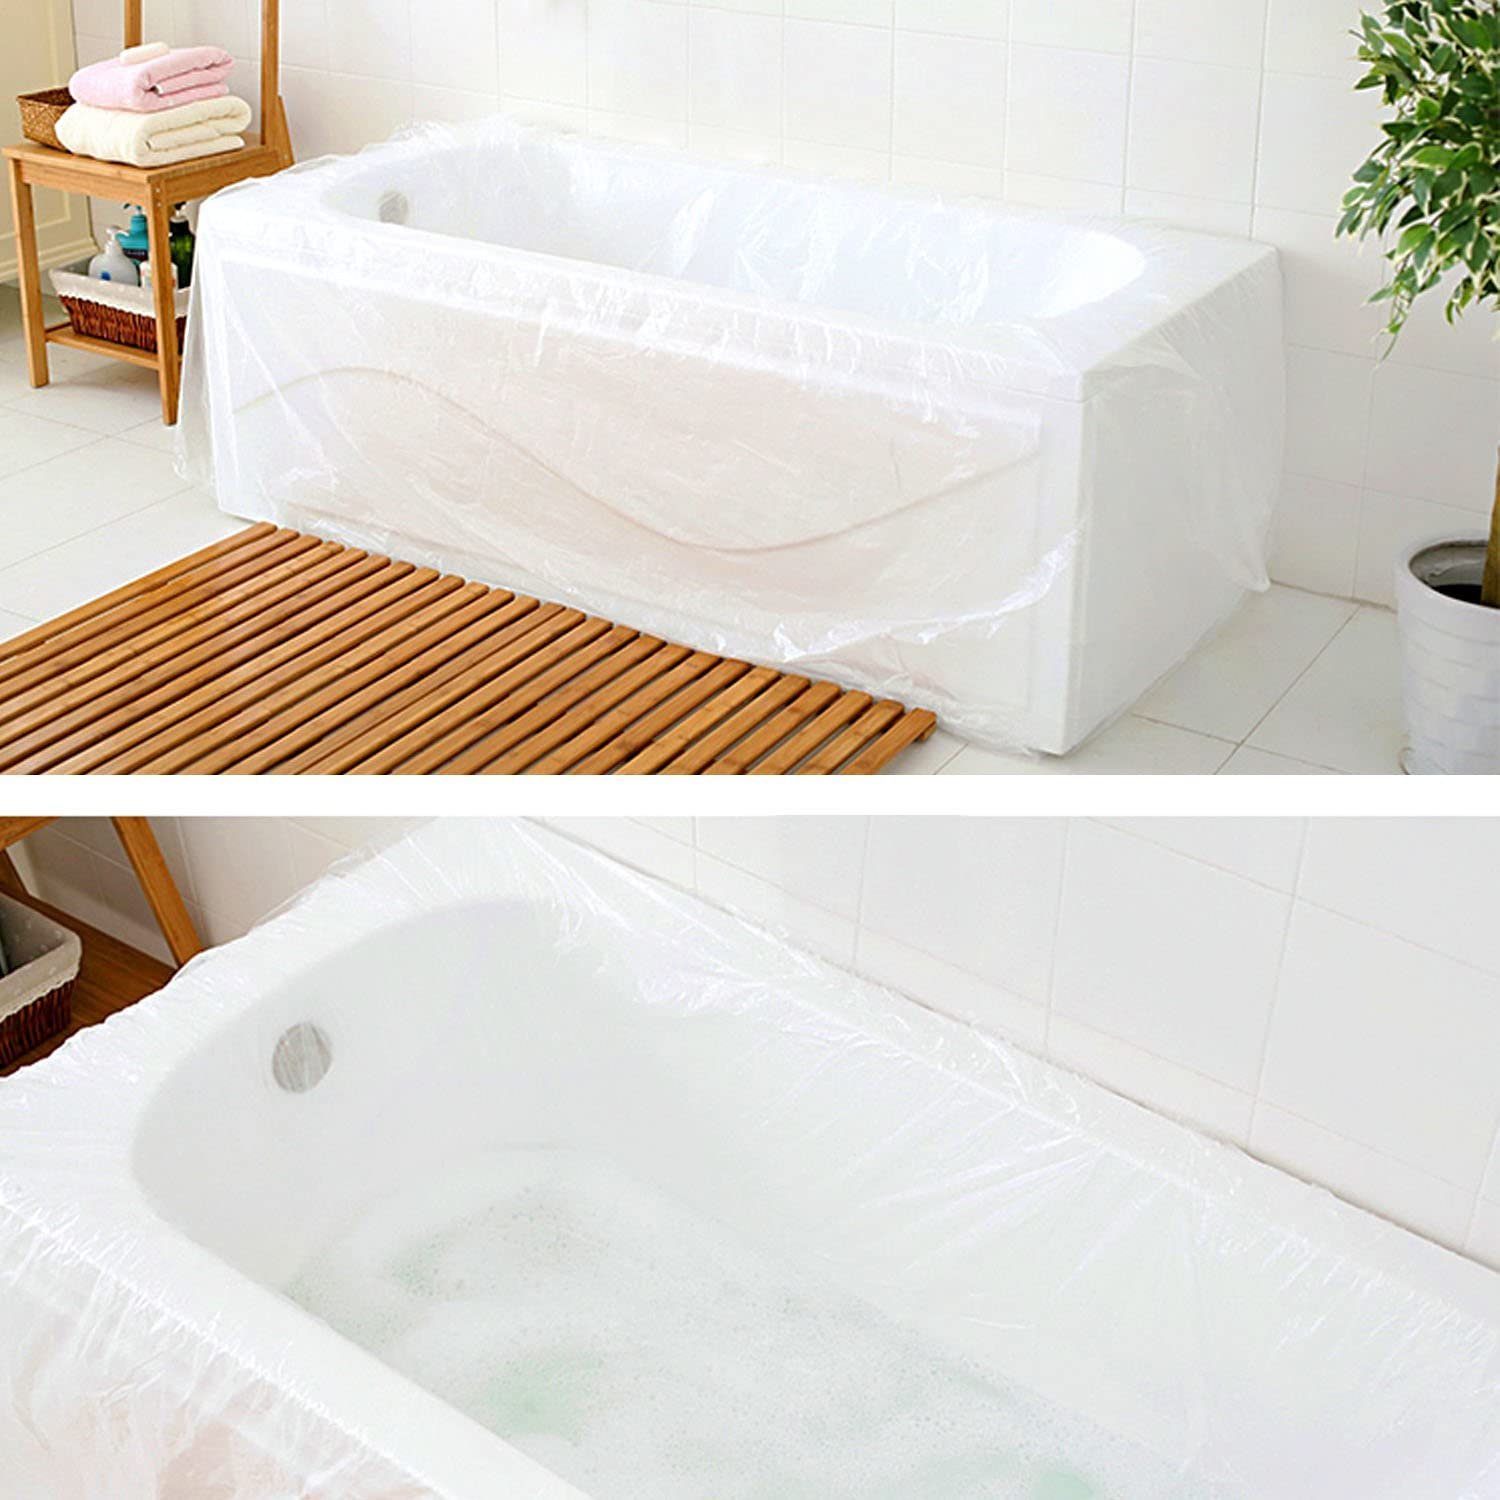 Inside of the disposable bathtub bag, portable clear disposable bathtub bathing cover film liner